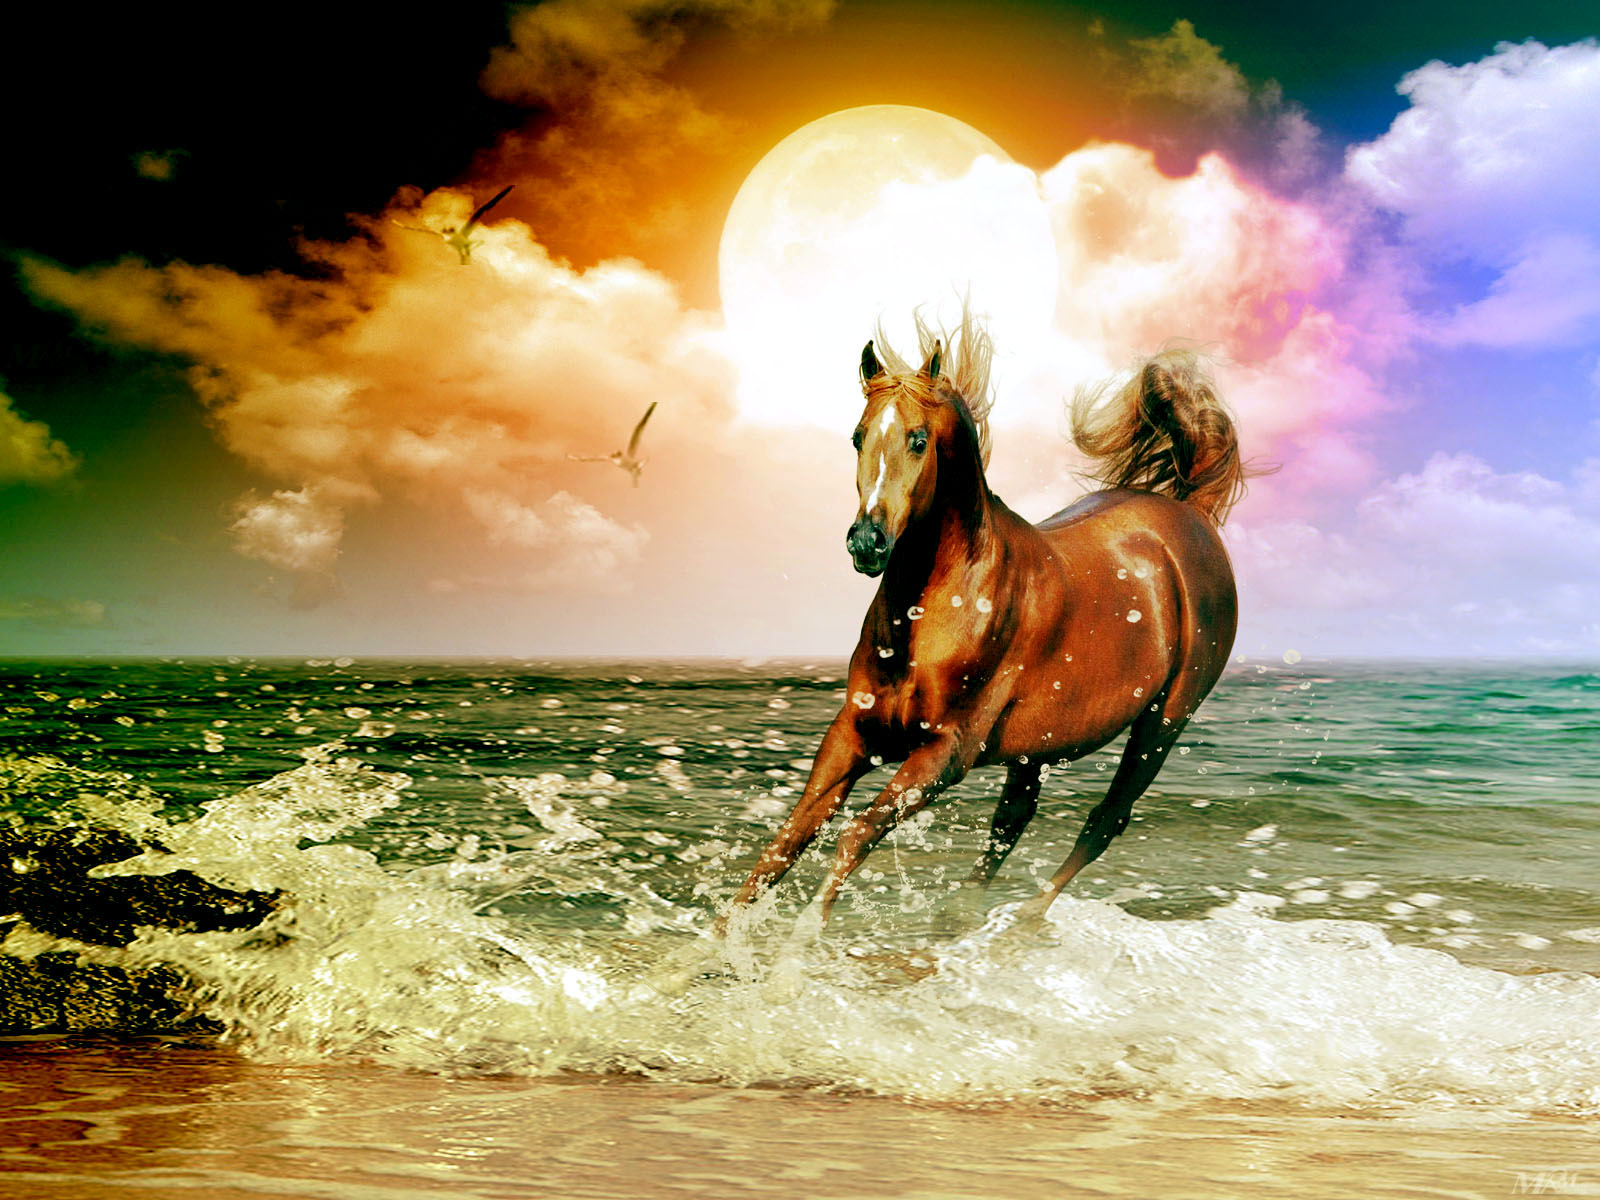 In Sun Set Wallpaper Horse Running Jumping